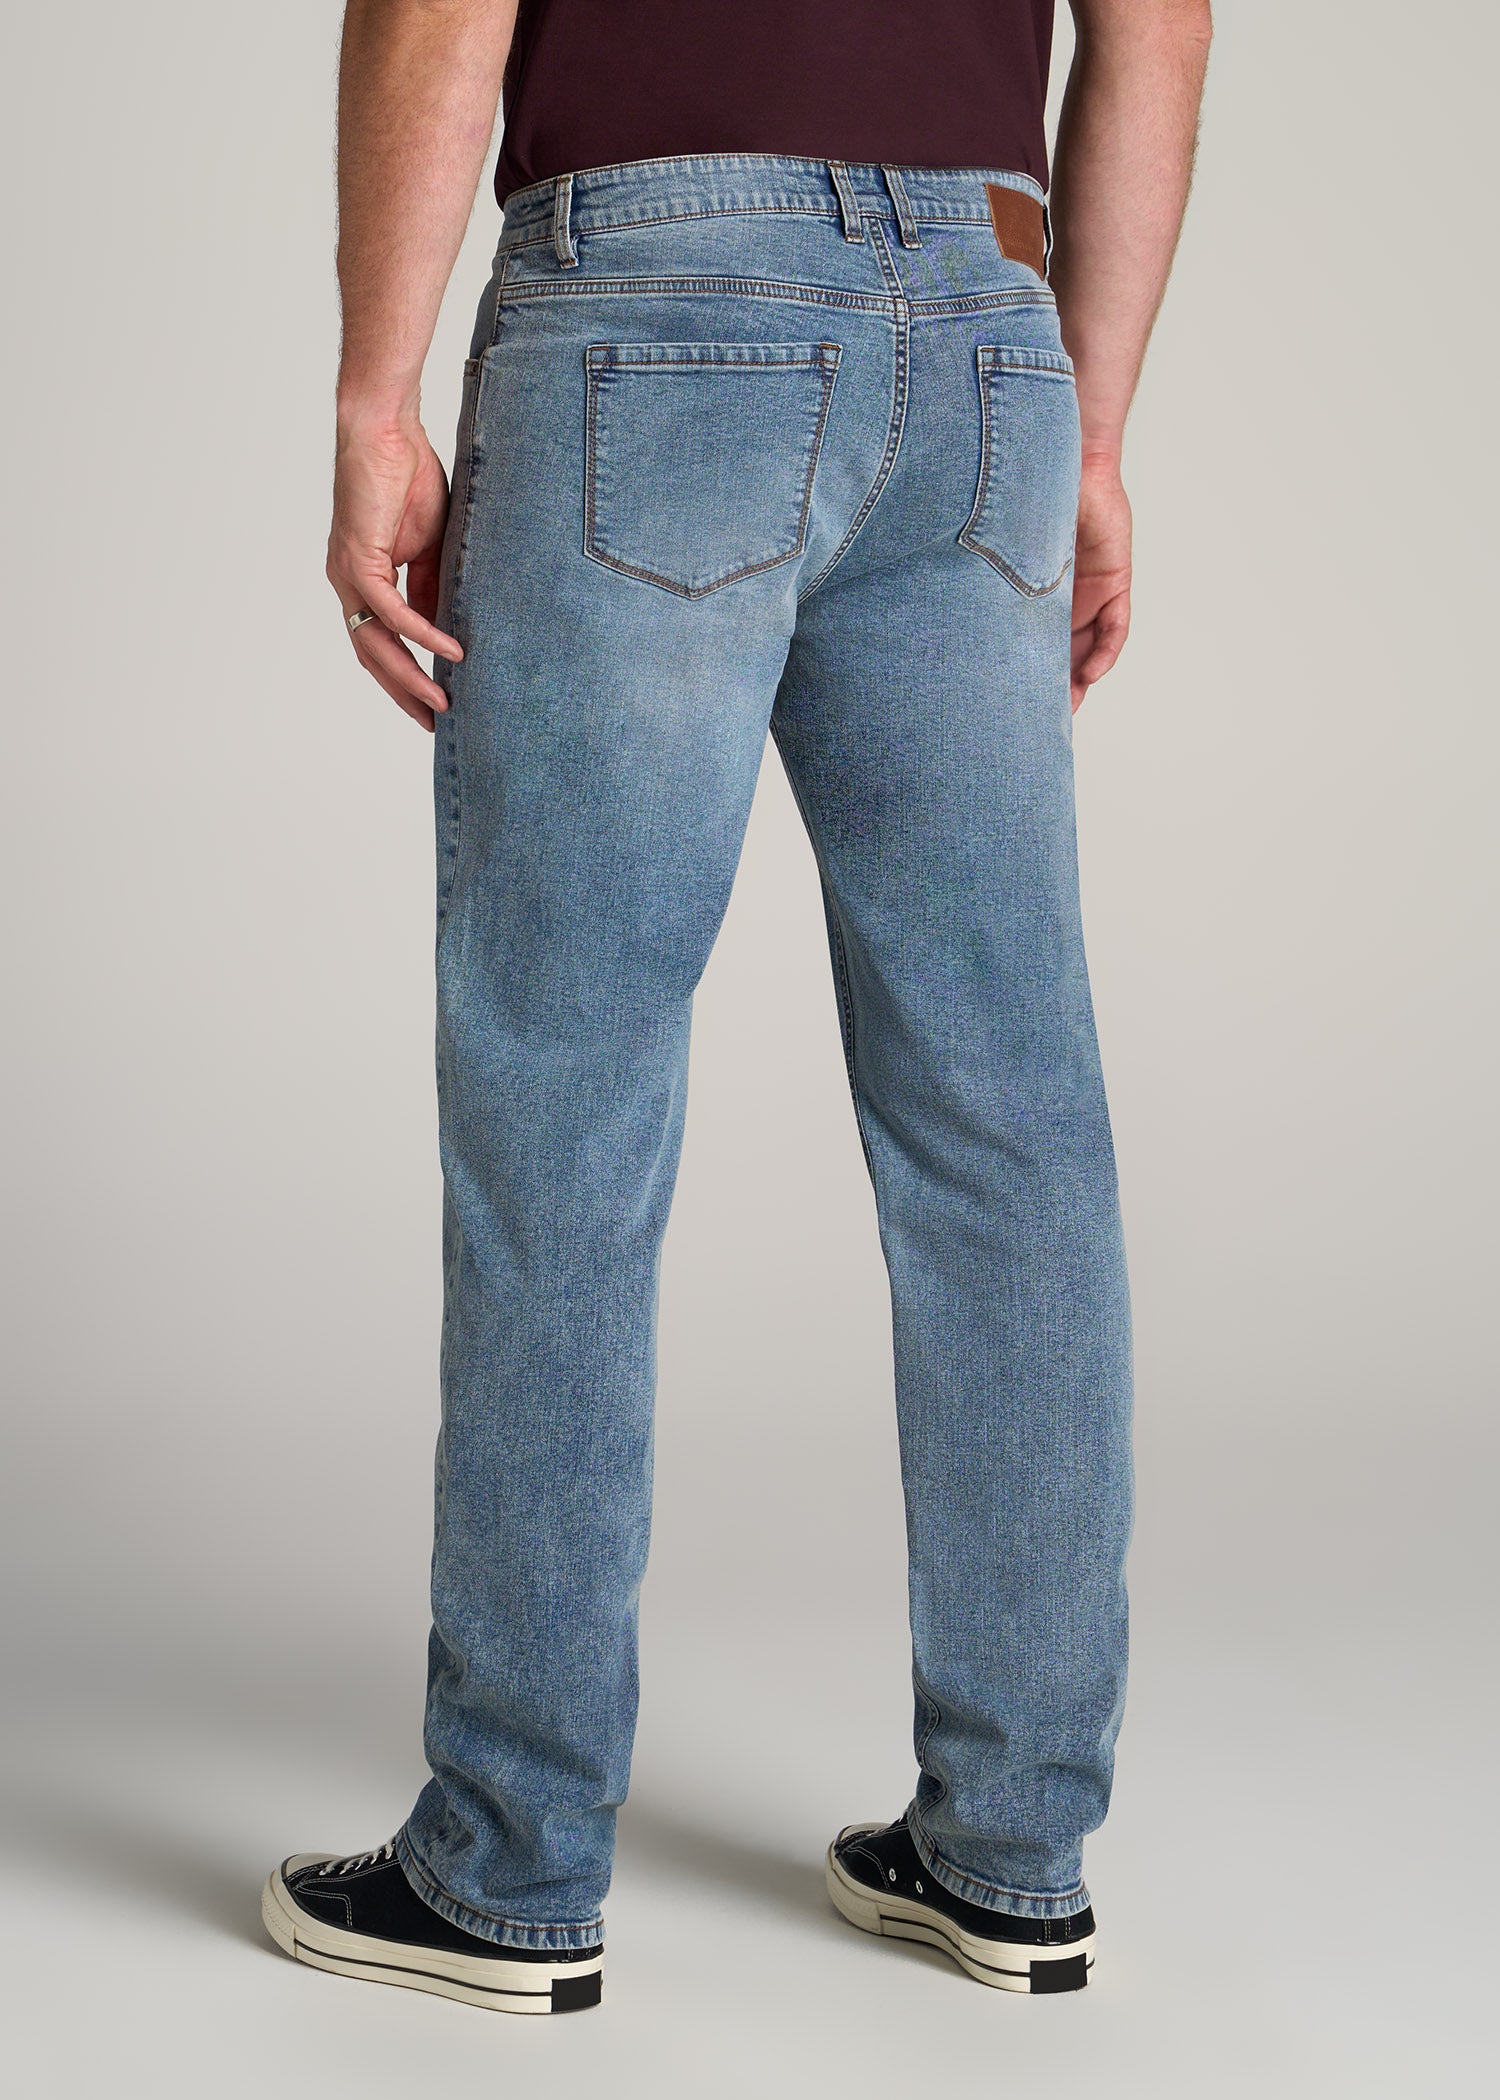       American-Tall-Men-J1-Jeans-Faded-Blue-back